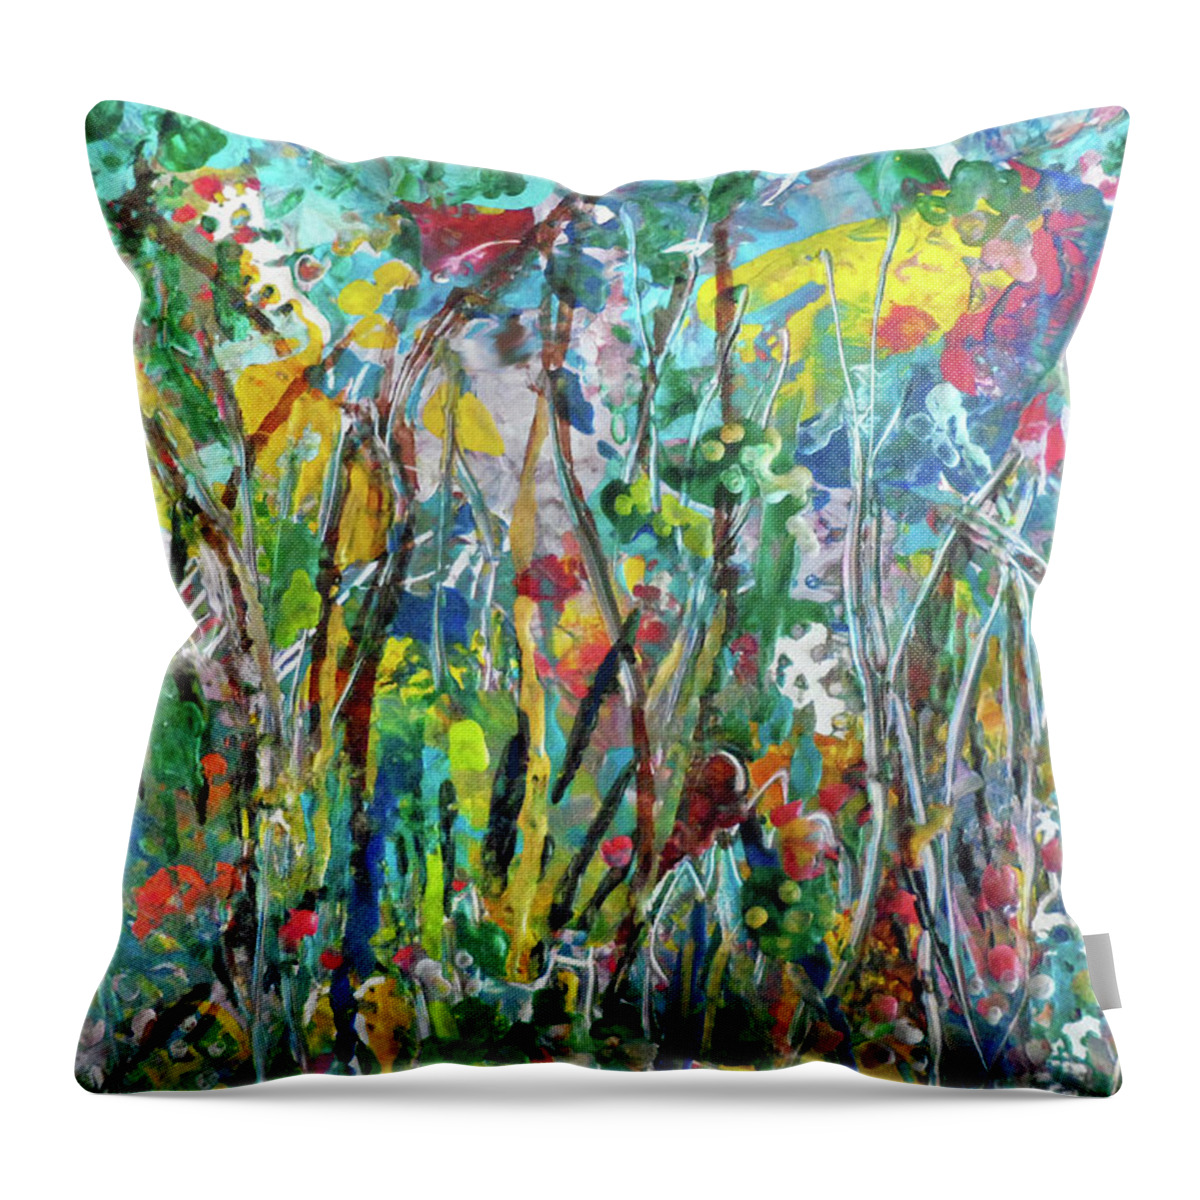 Encaustic Throw Pillow featuring the painting Garden Flourish by Jean Batzell Fitzgerald